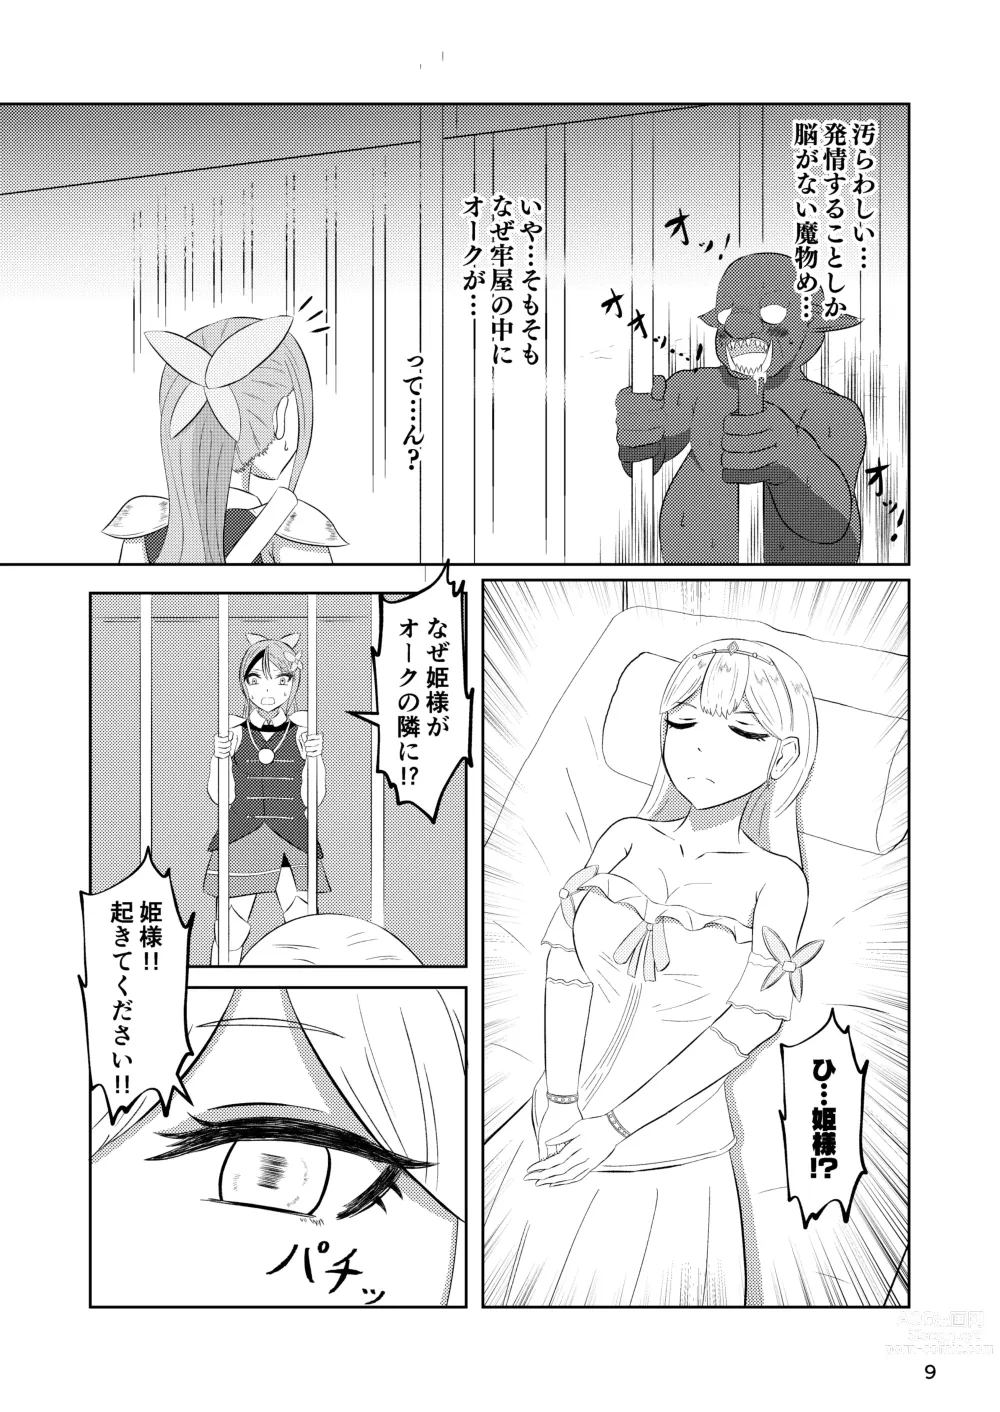 Page 8 of doujinshi Hime to Kishi  wa Nukarumi ni Kawaru